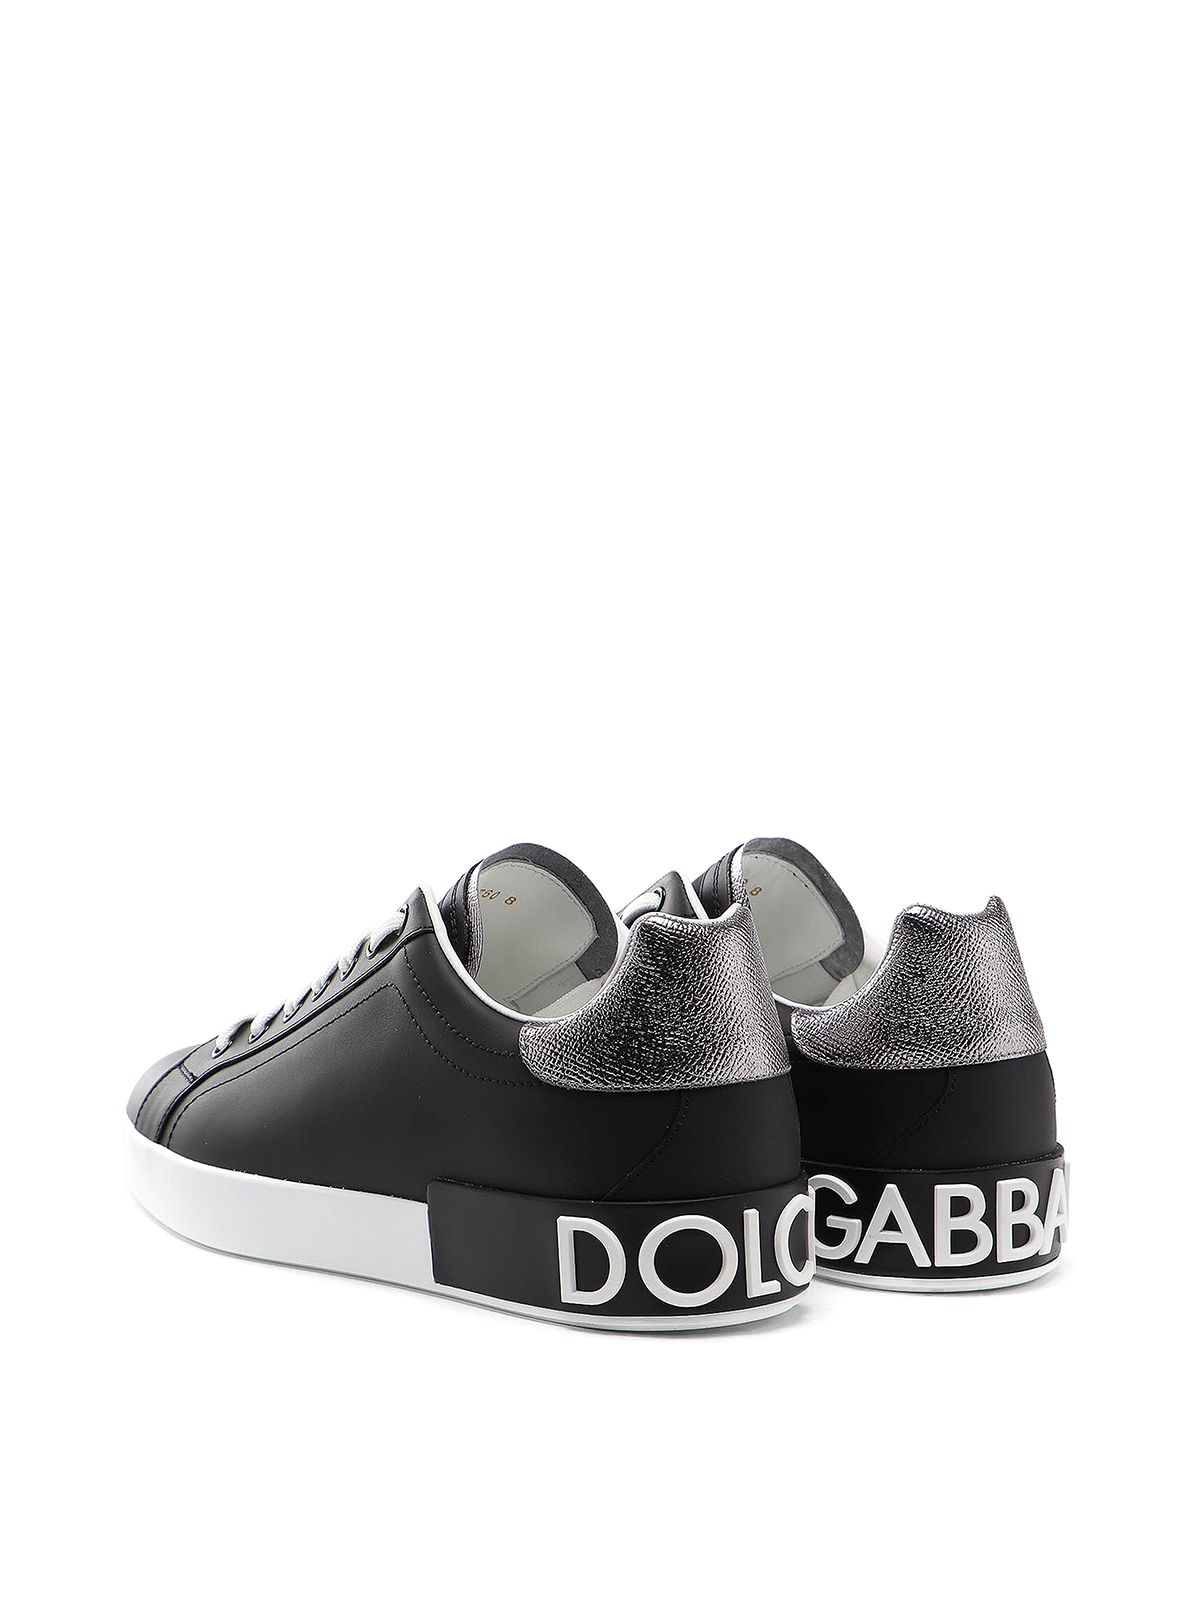 Dolce & Gabbana Portofino Low-top Leather Sneakers In Black | ModeSens